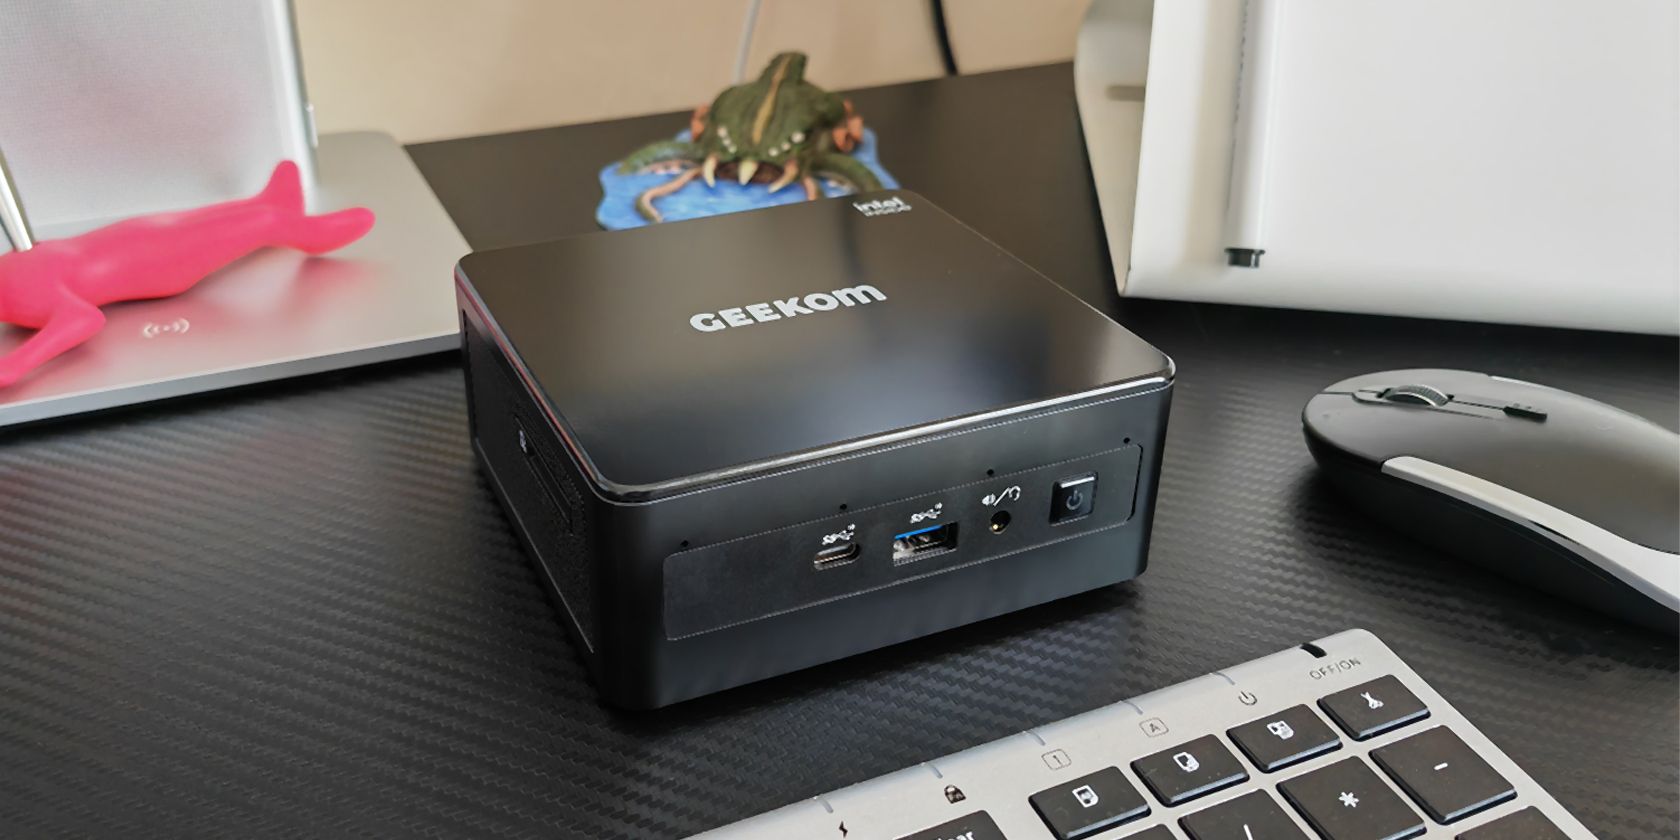 Geekom IT8 mini pc on desk